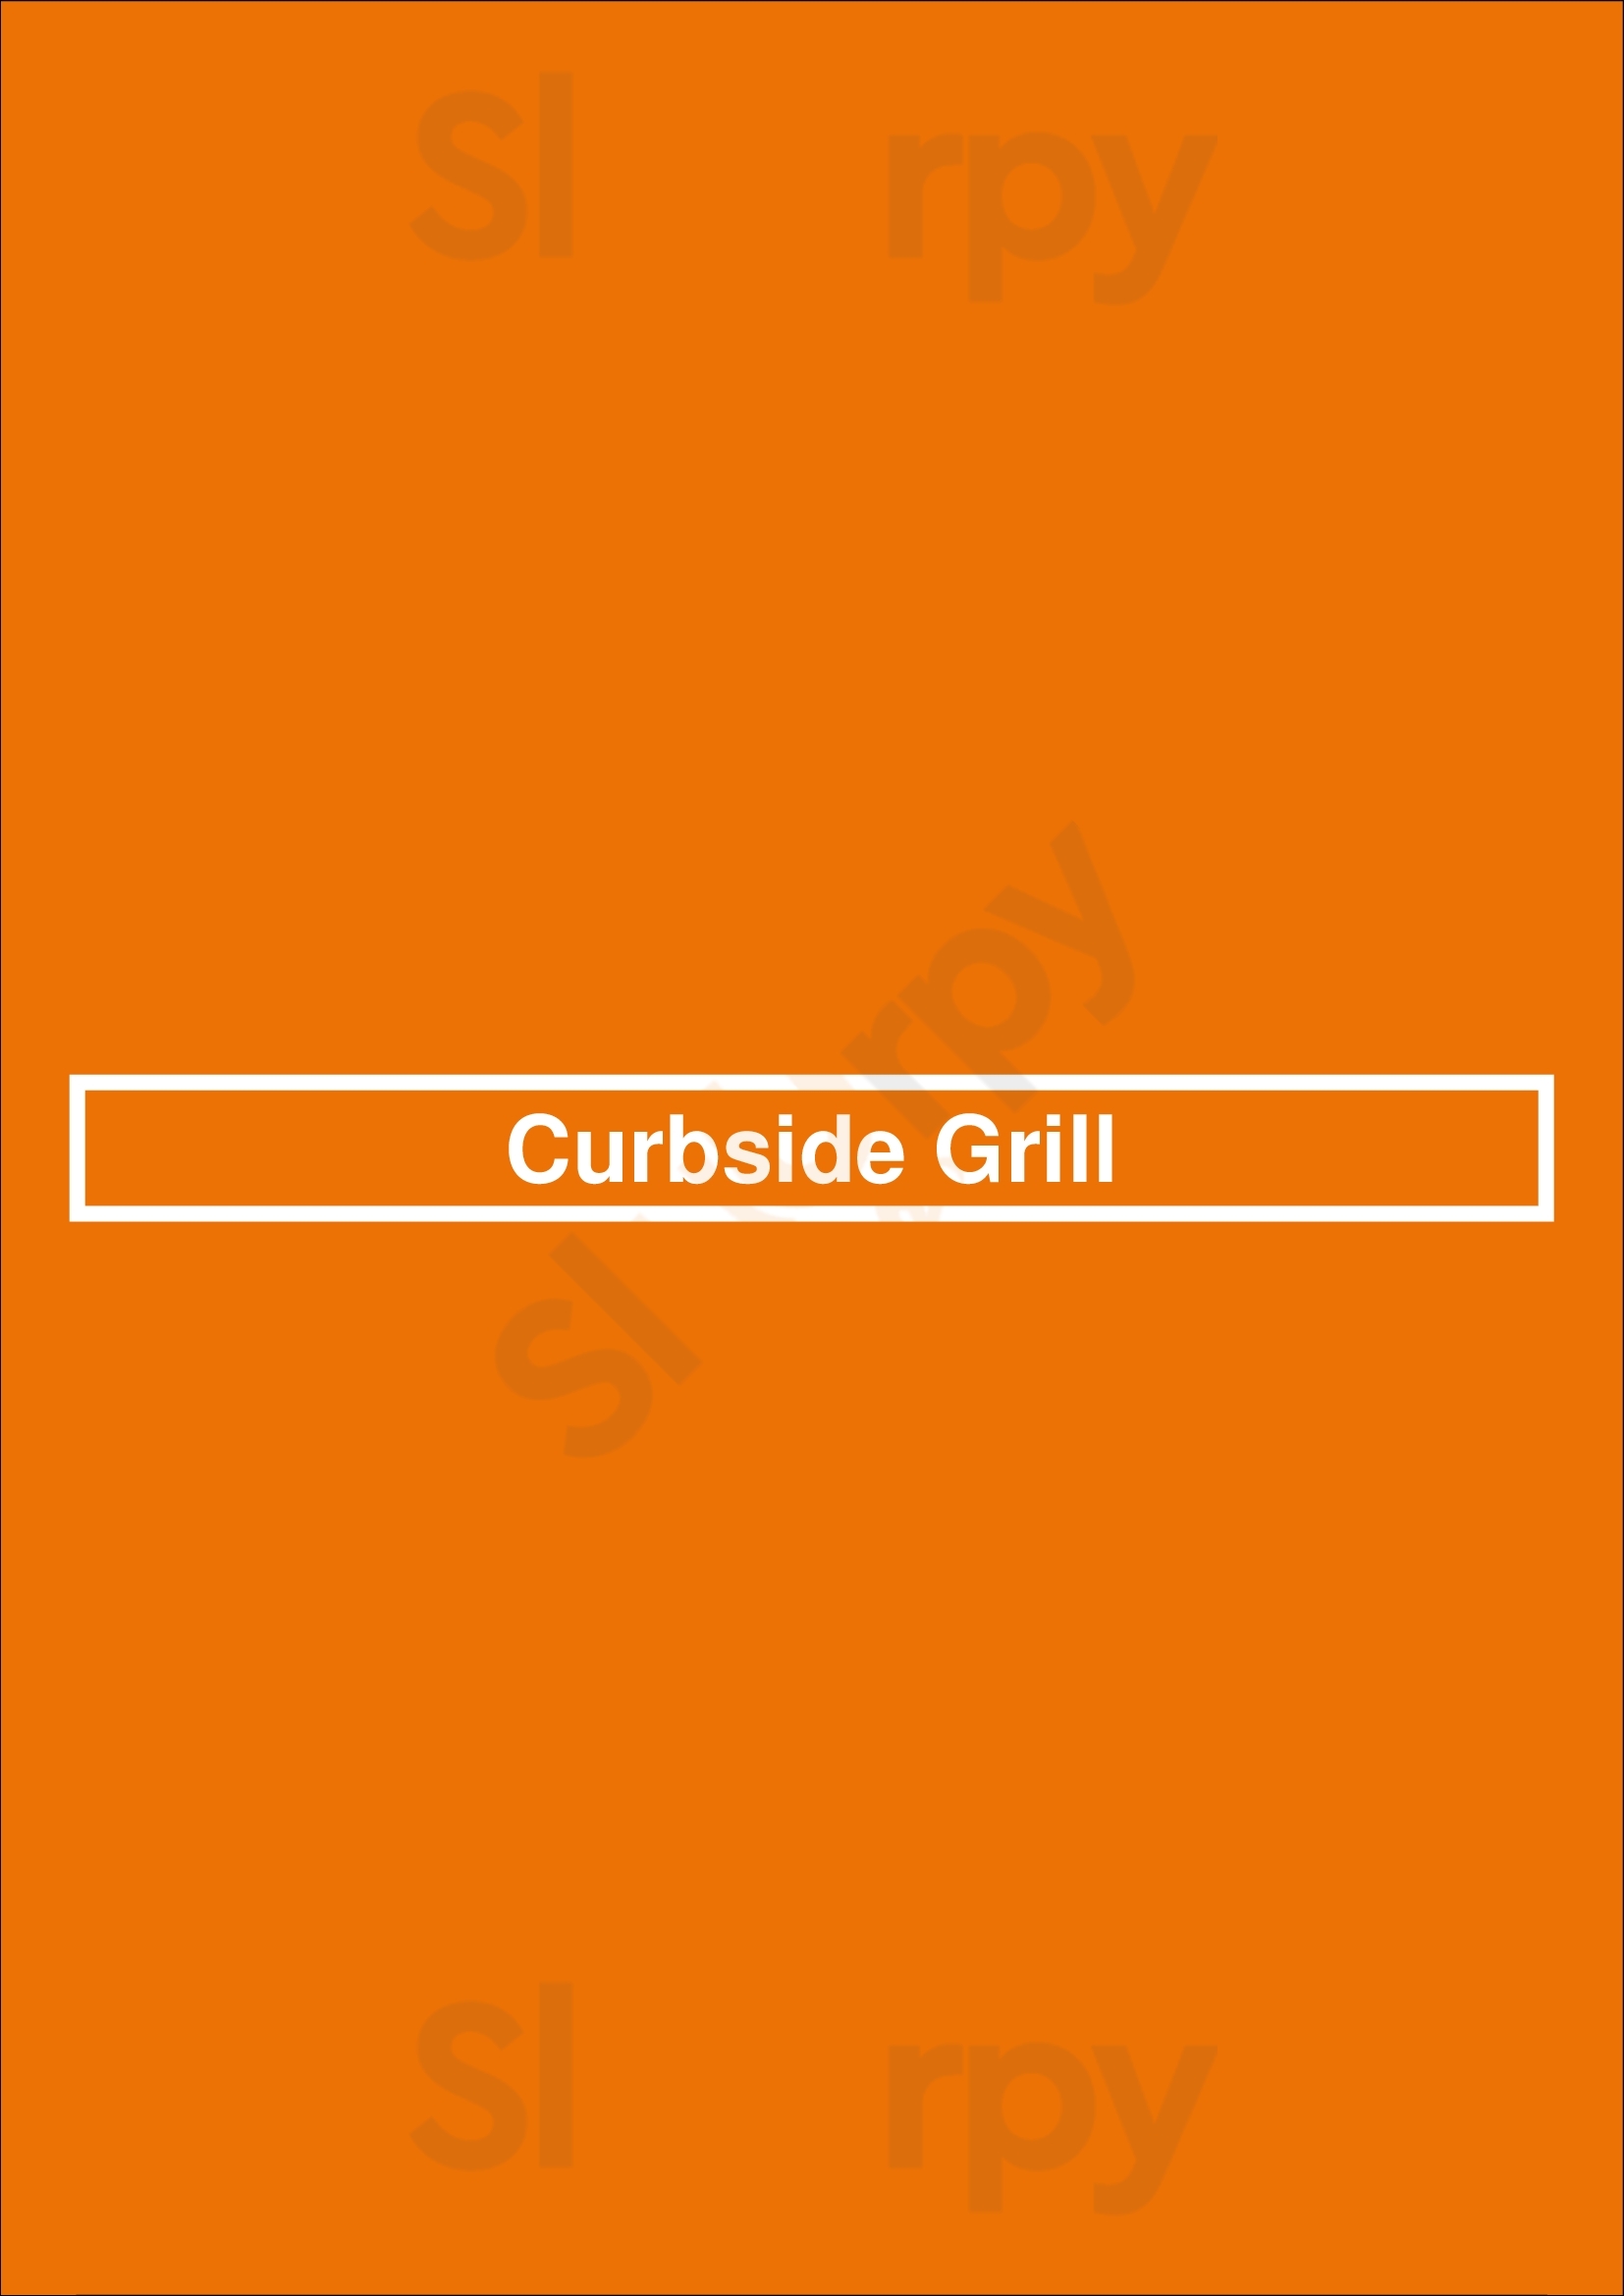 Curbside Grill Hamilton Menu - 1